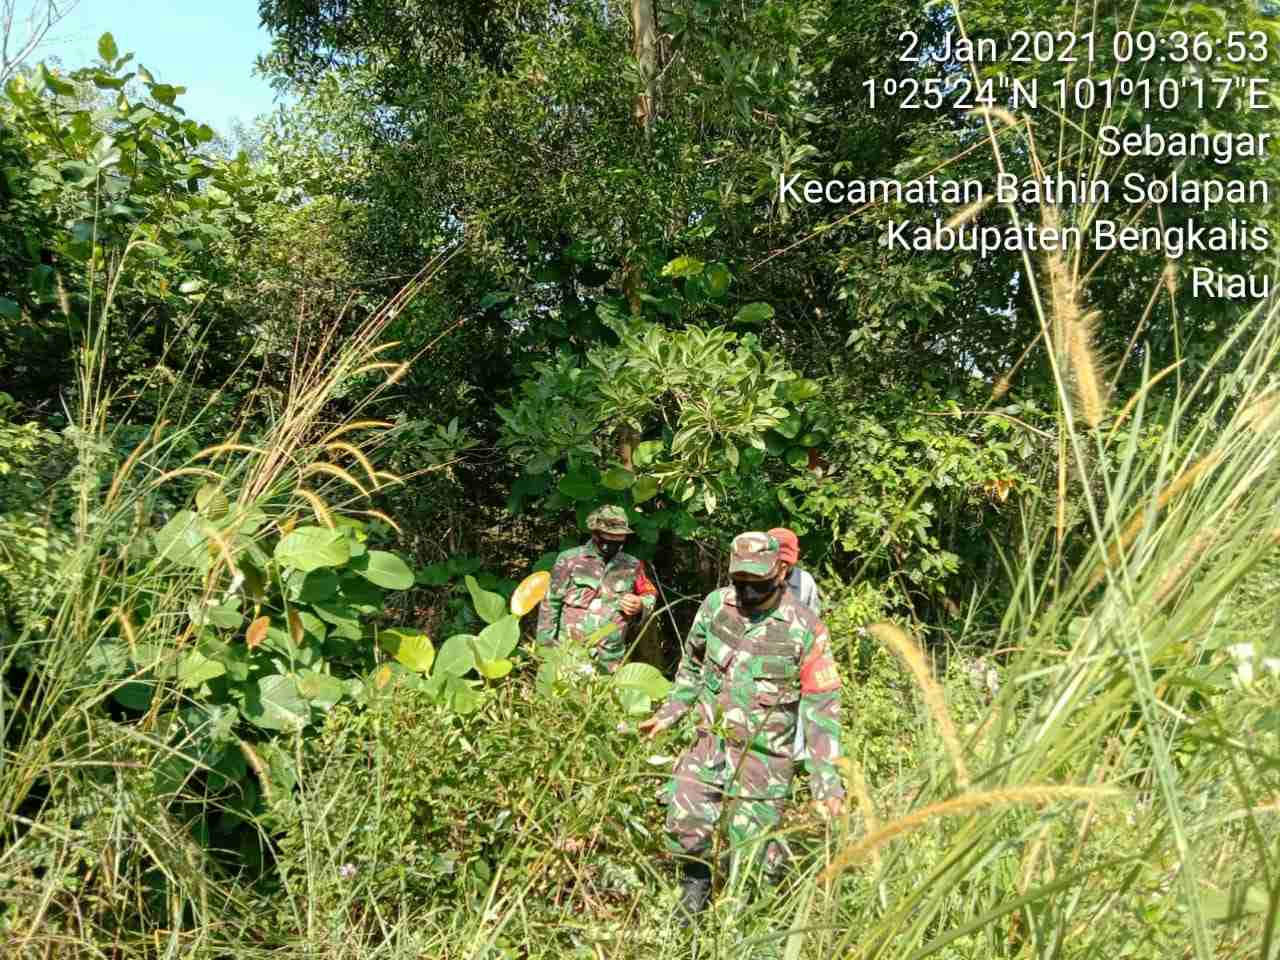 Koptu Ml. Silaban Patroli Karhutla di Desa Kesumbo Ampai